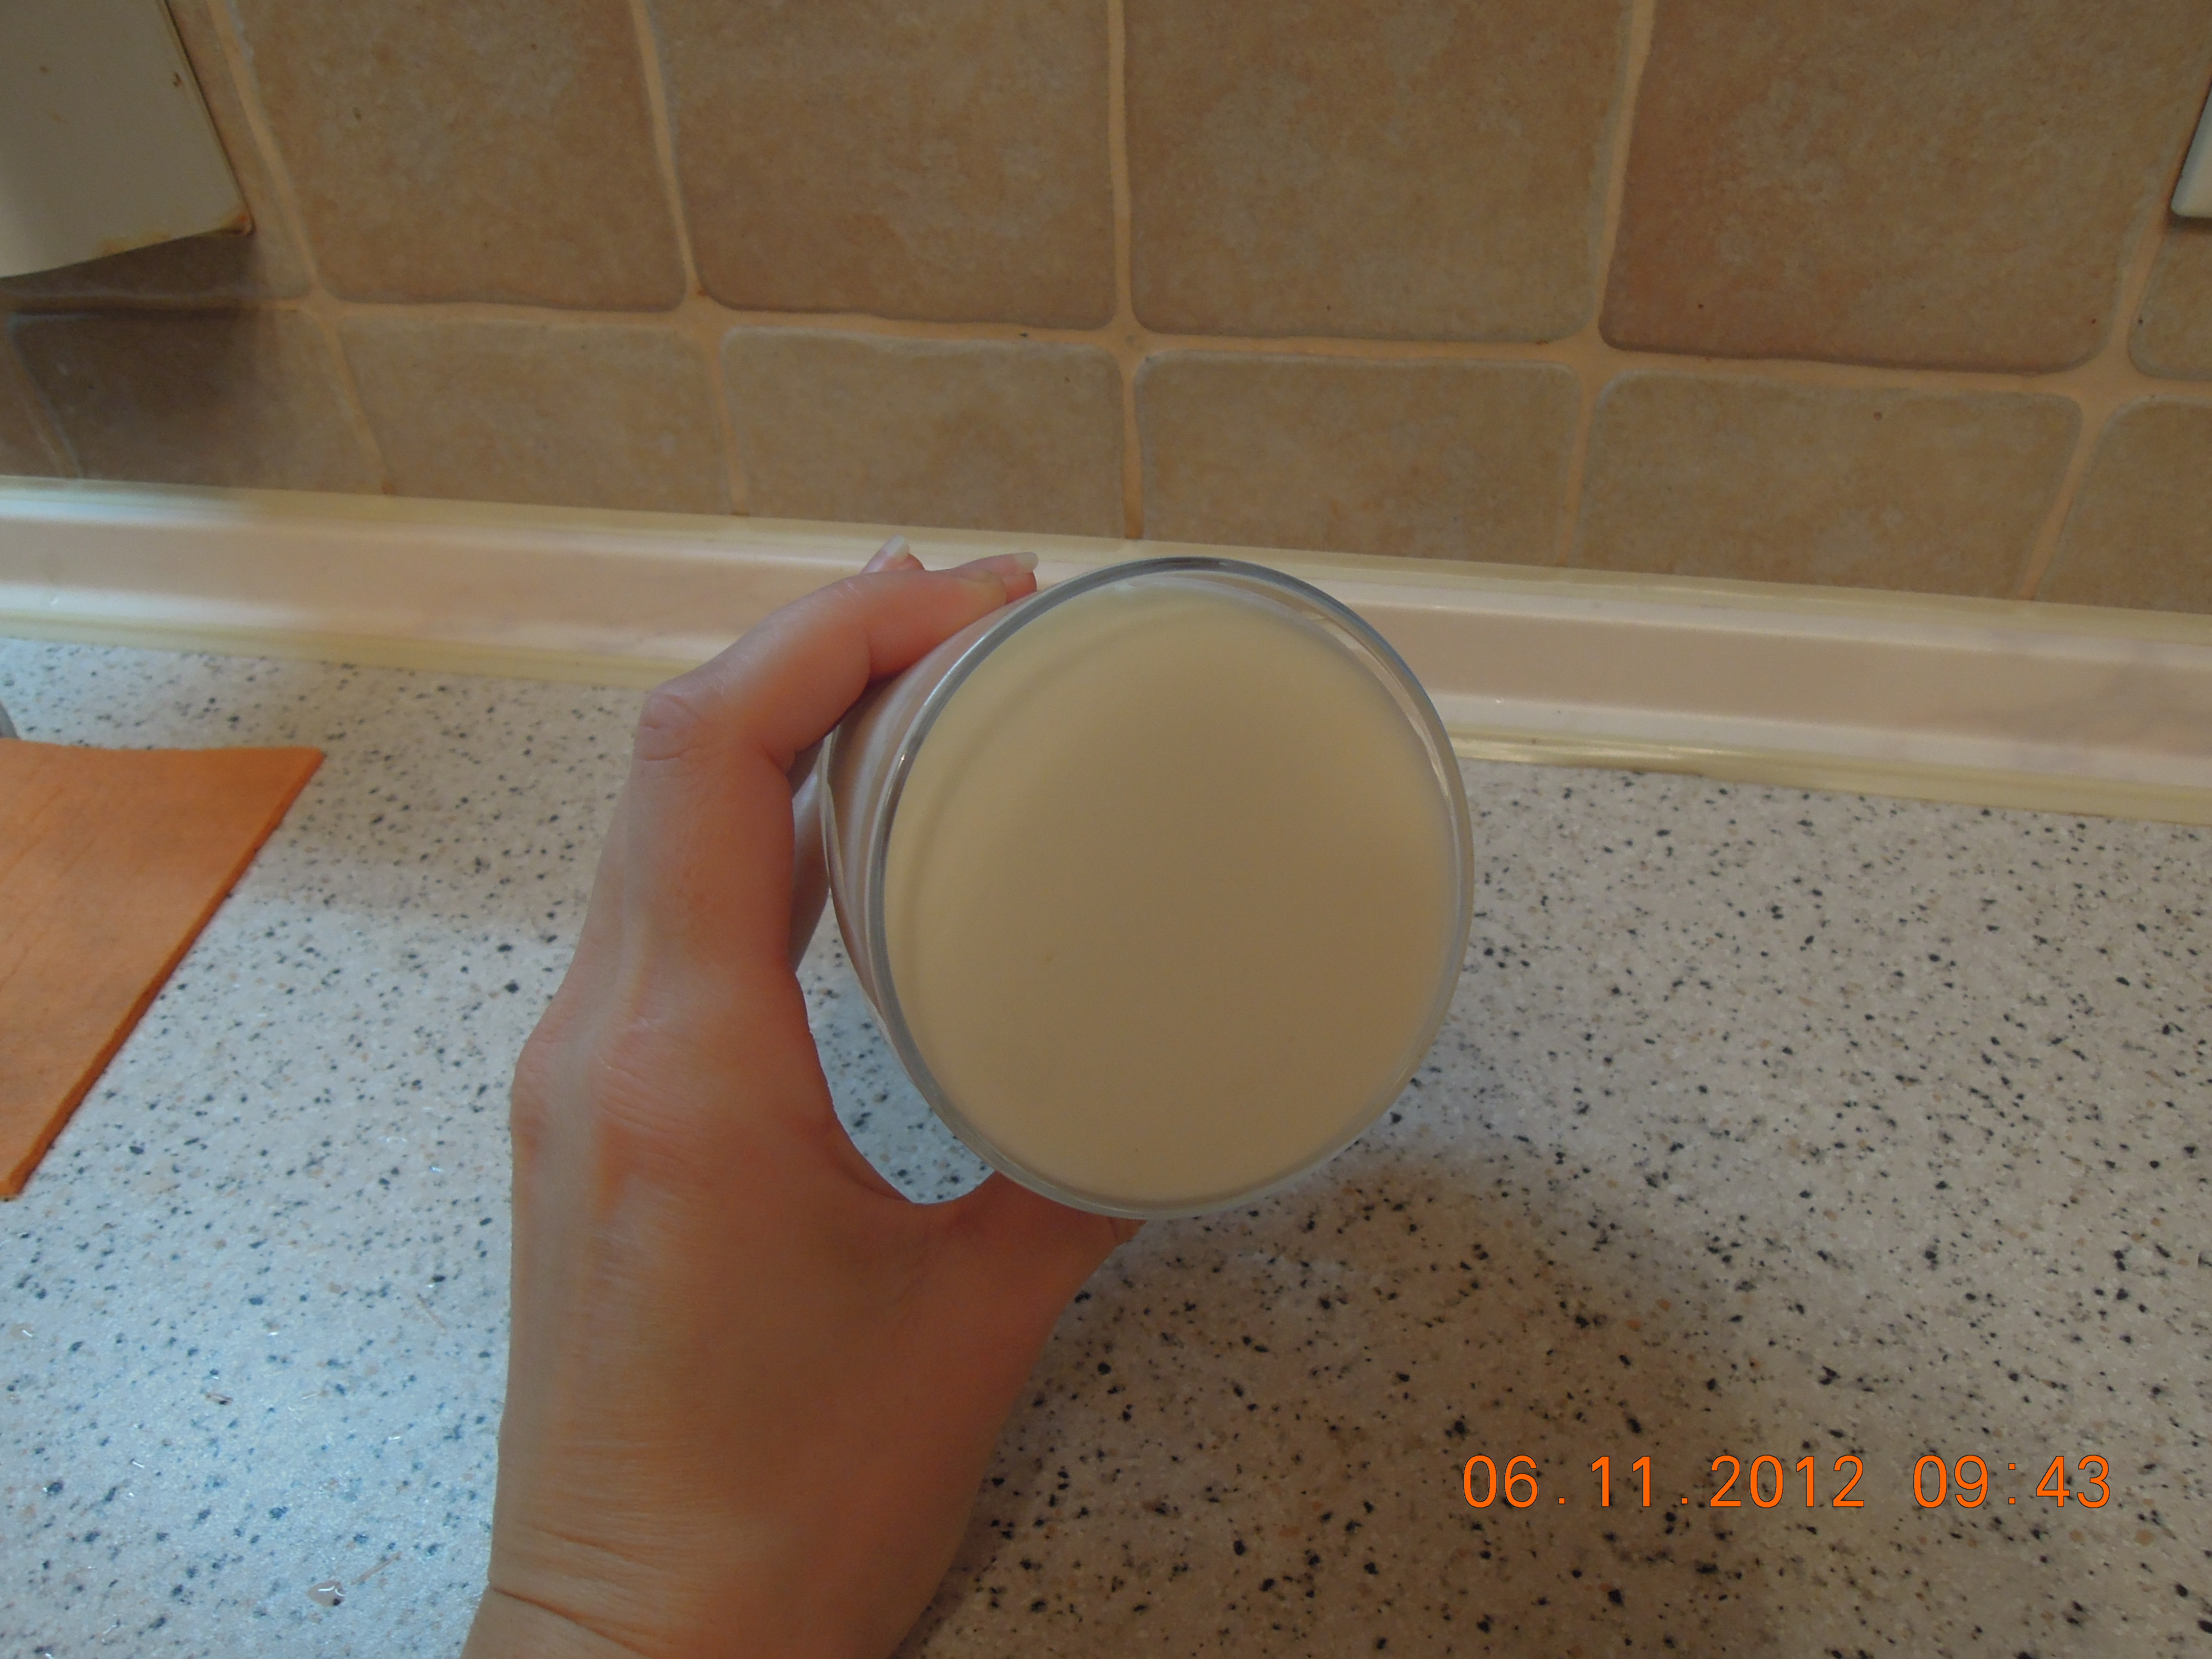 Yogurt in a slow cooker (Cuckoo 1054)